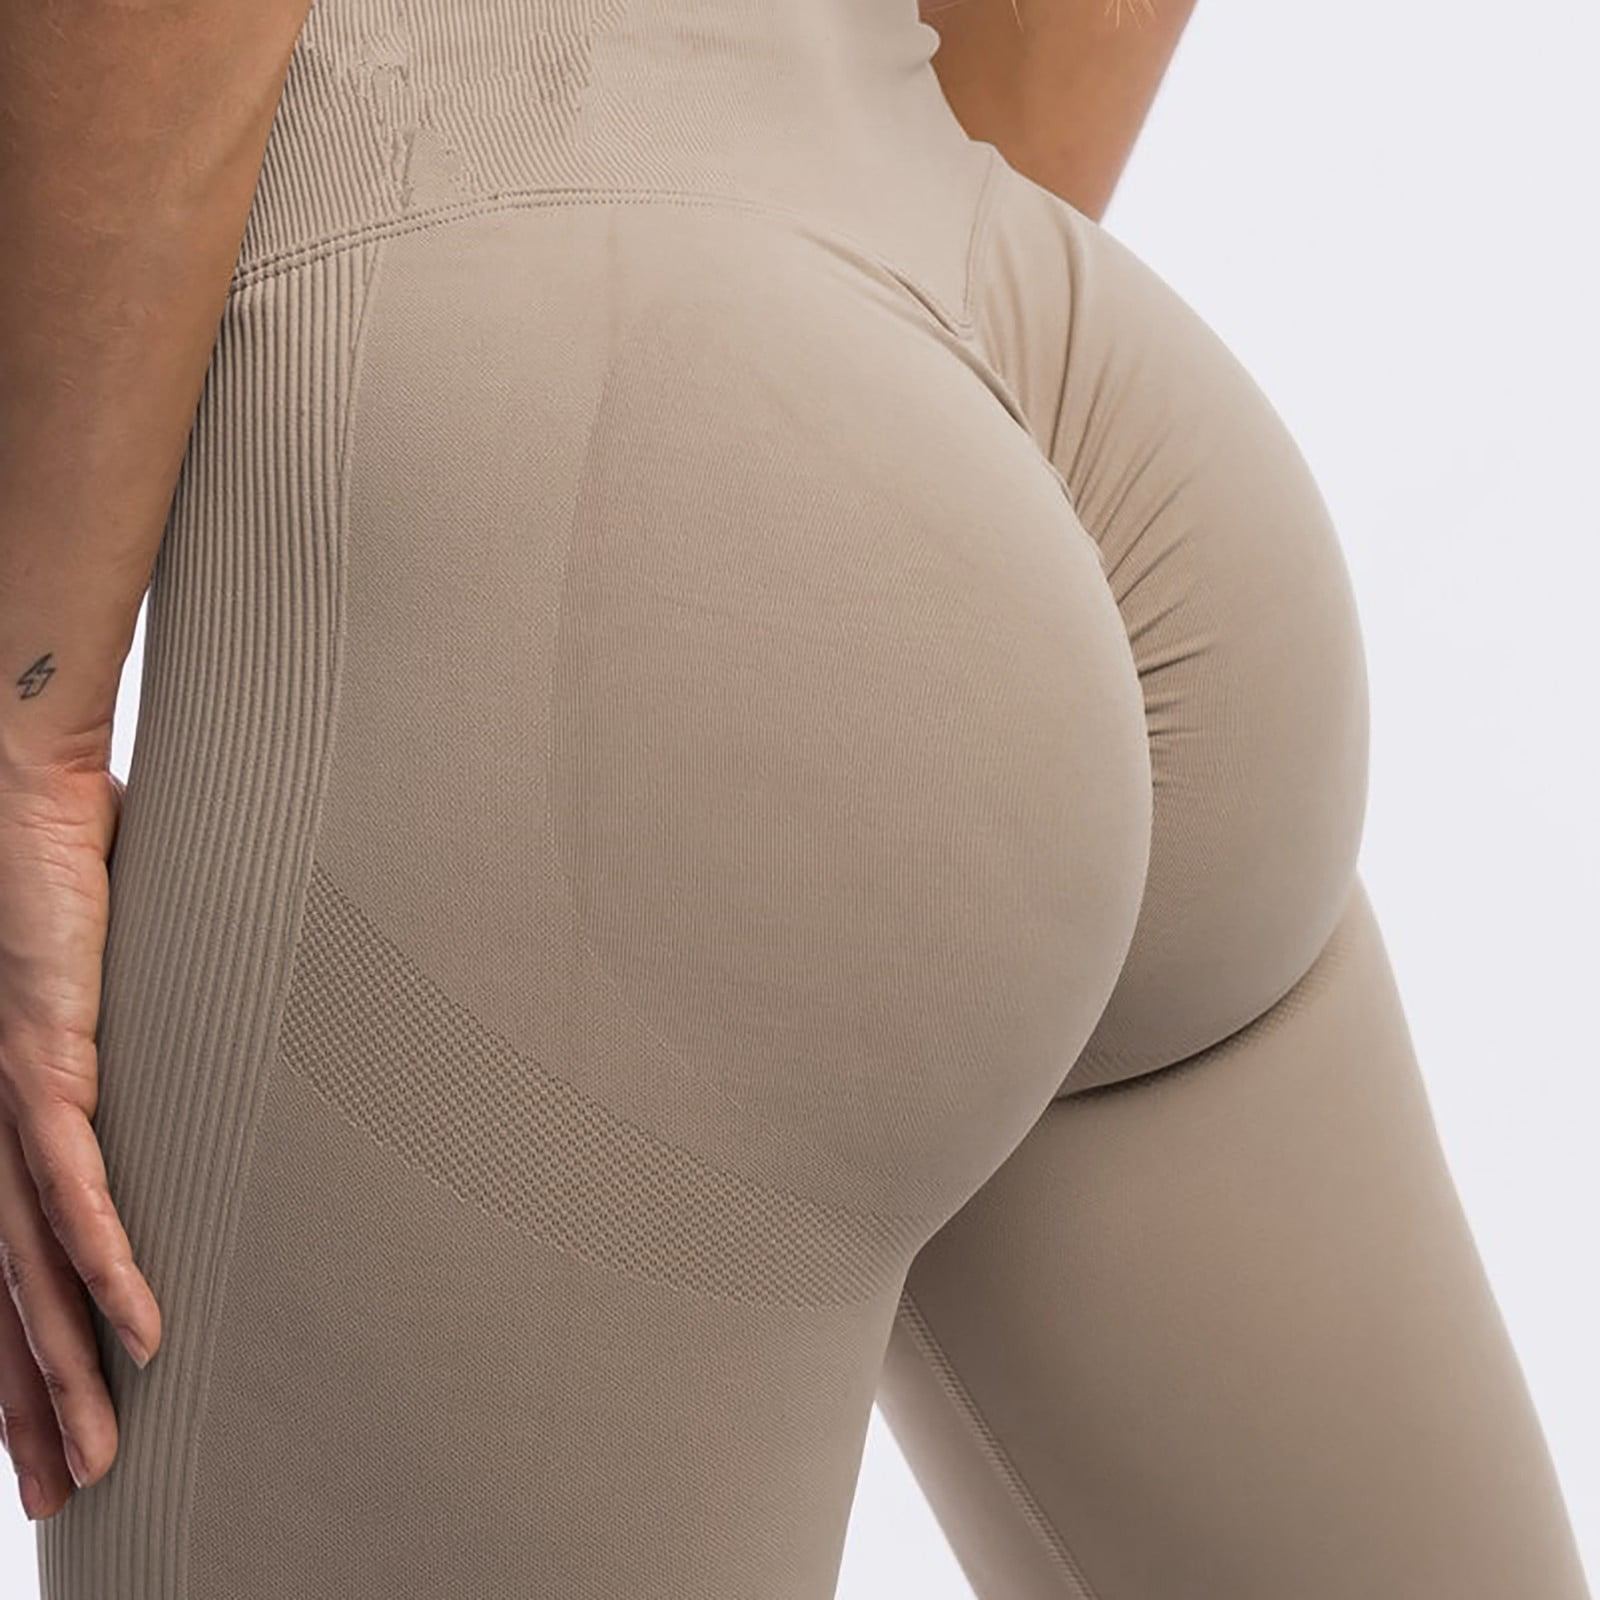 1Pc Women's Seamless High-Waist Butt Lift Tummy Control Leggings For Base  Layering